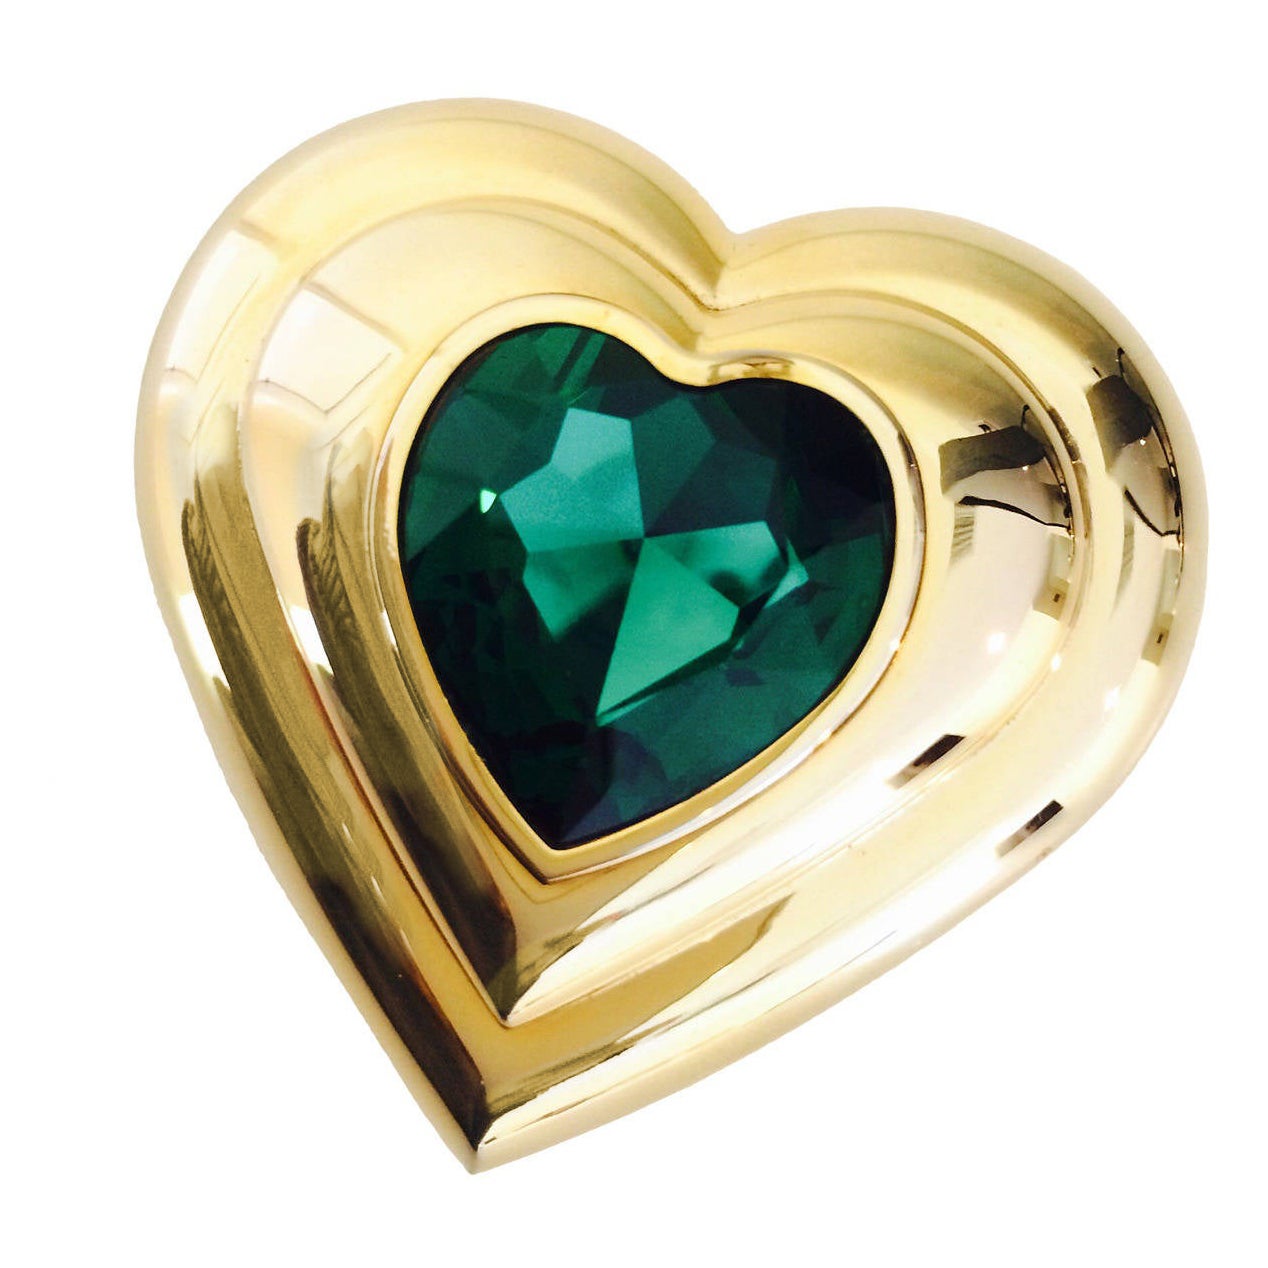 Heart Shaped Purses - 19 For Sale on 1stDibs  heart shaped handbag, heart  shape purse, heart shape handbag